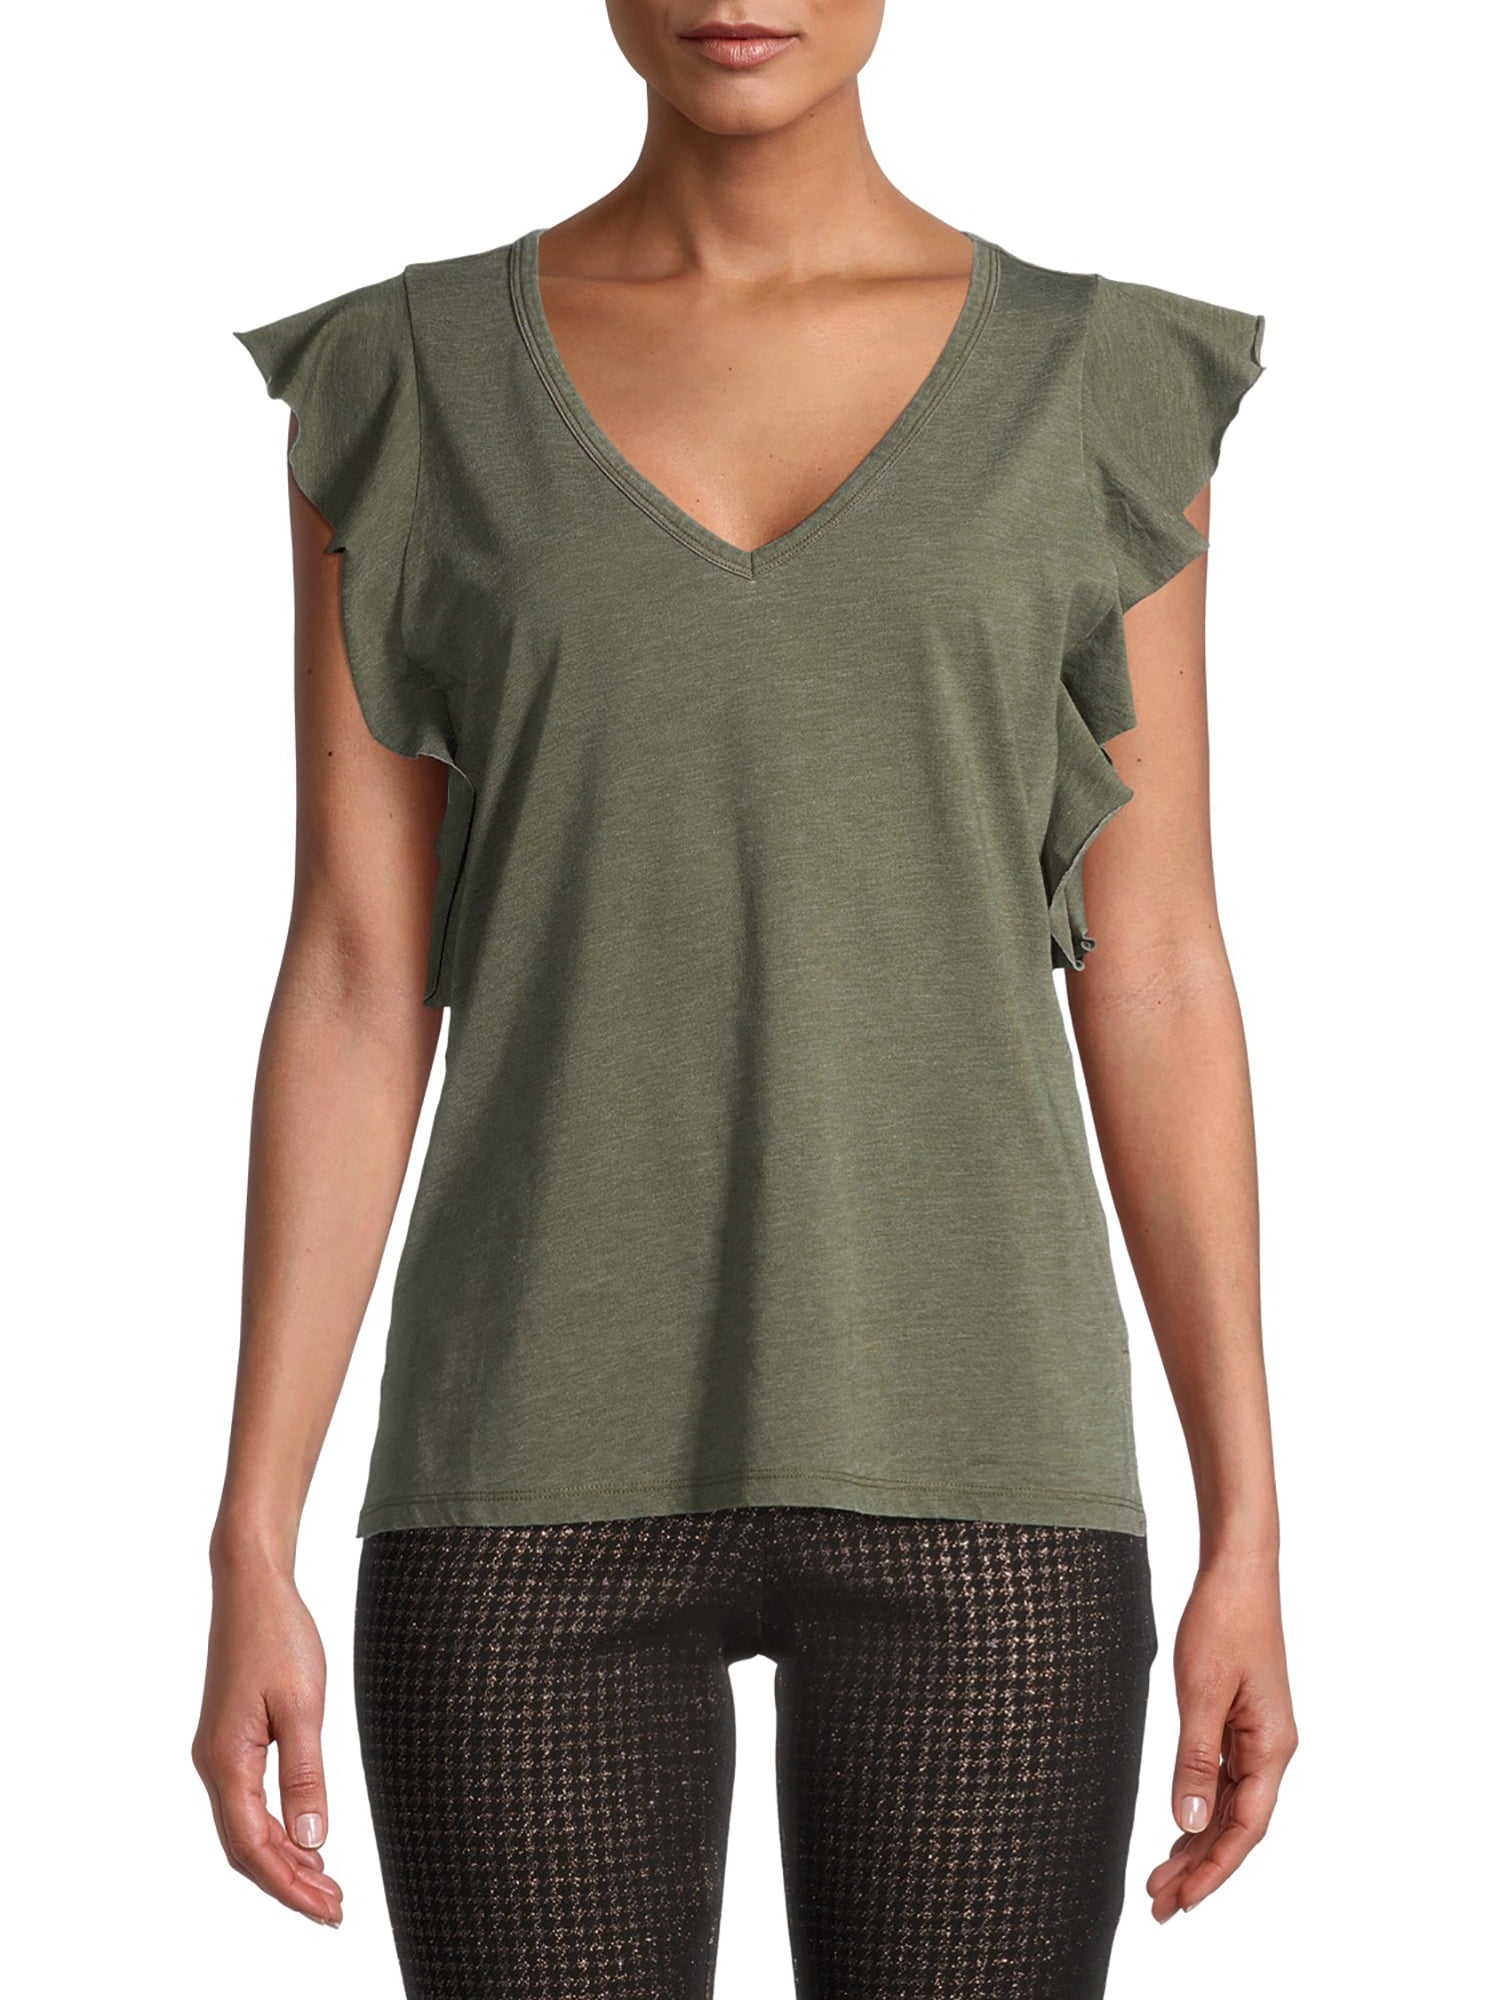 Randolly Womens Tops,Ladies Leaf Print Vest Sleeveless Loose Crop Tops Tank Tops Blouse Tops T-Shirt 